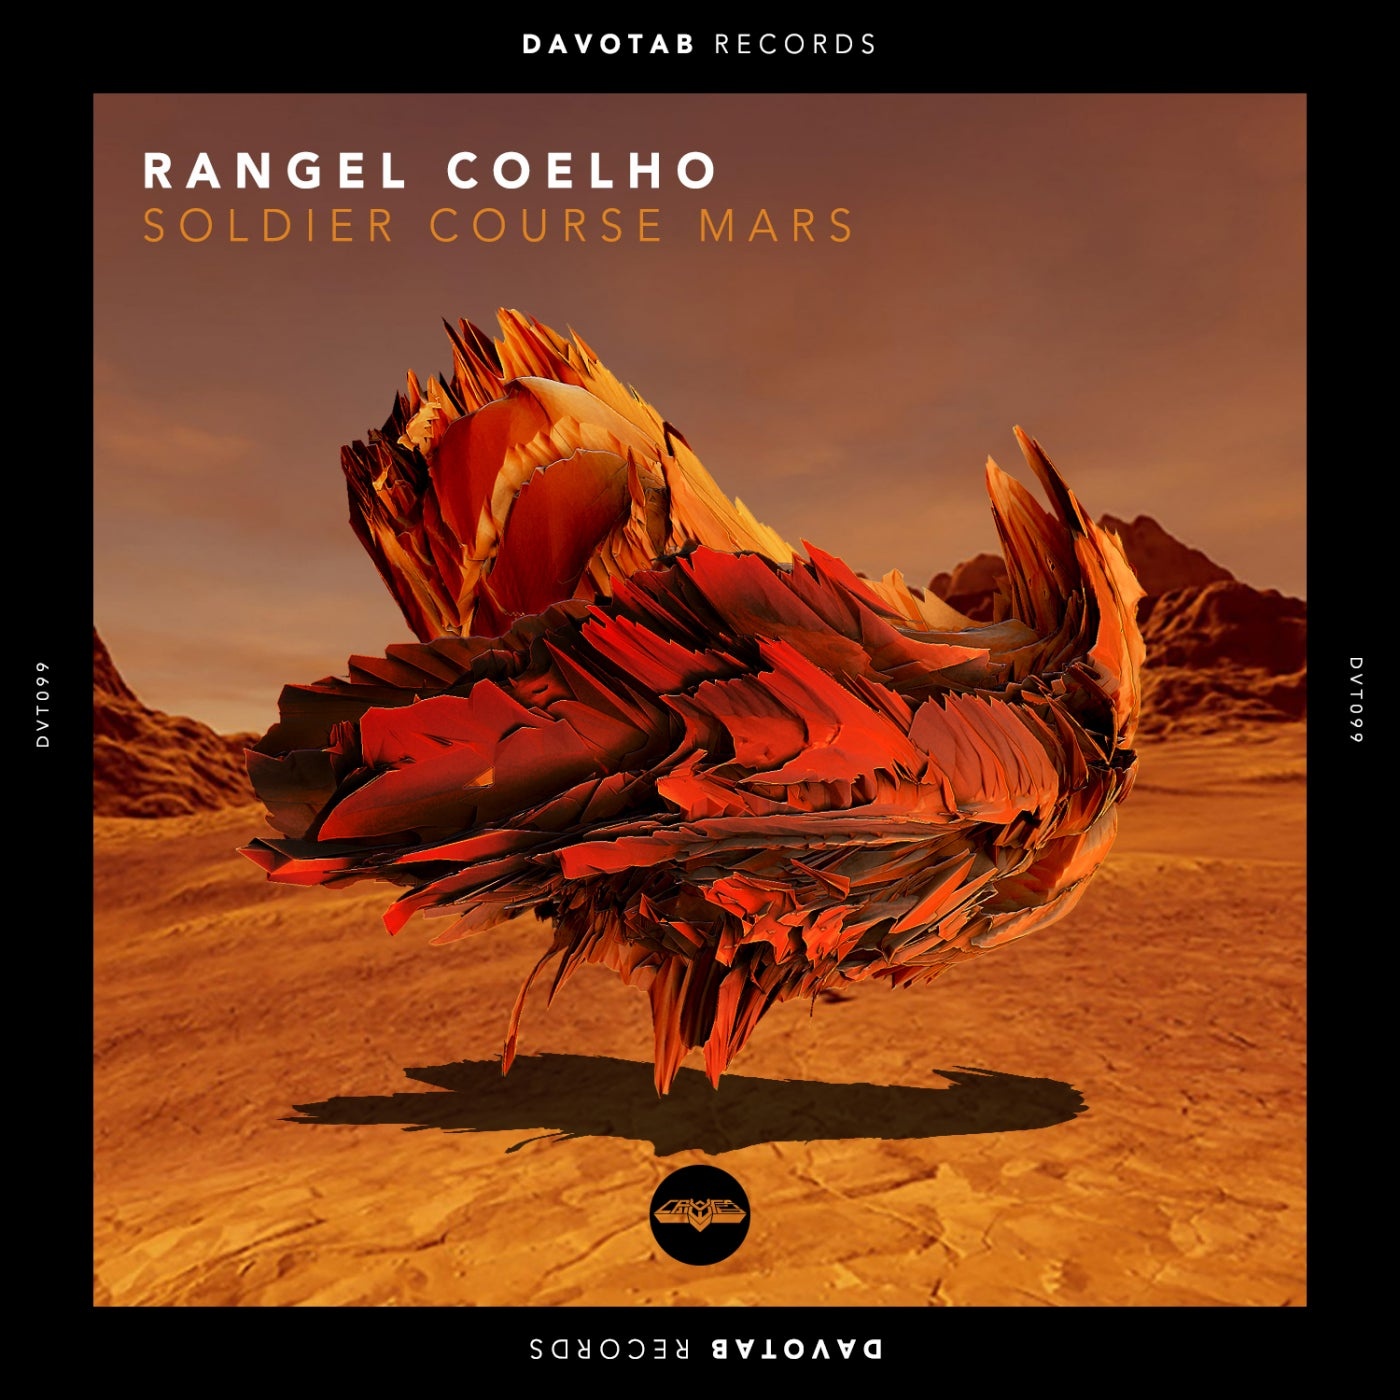 Rangel Coelho - Soldier Course Mars [DVT099]